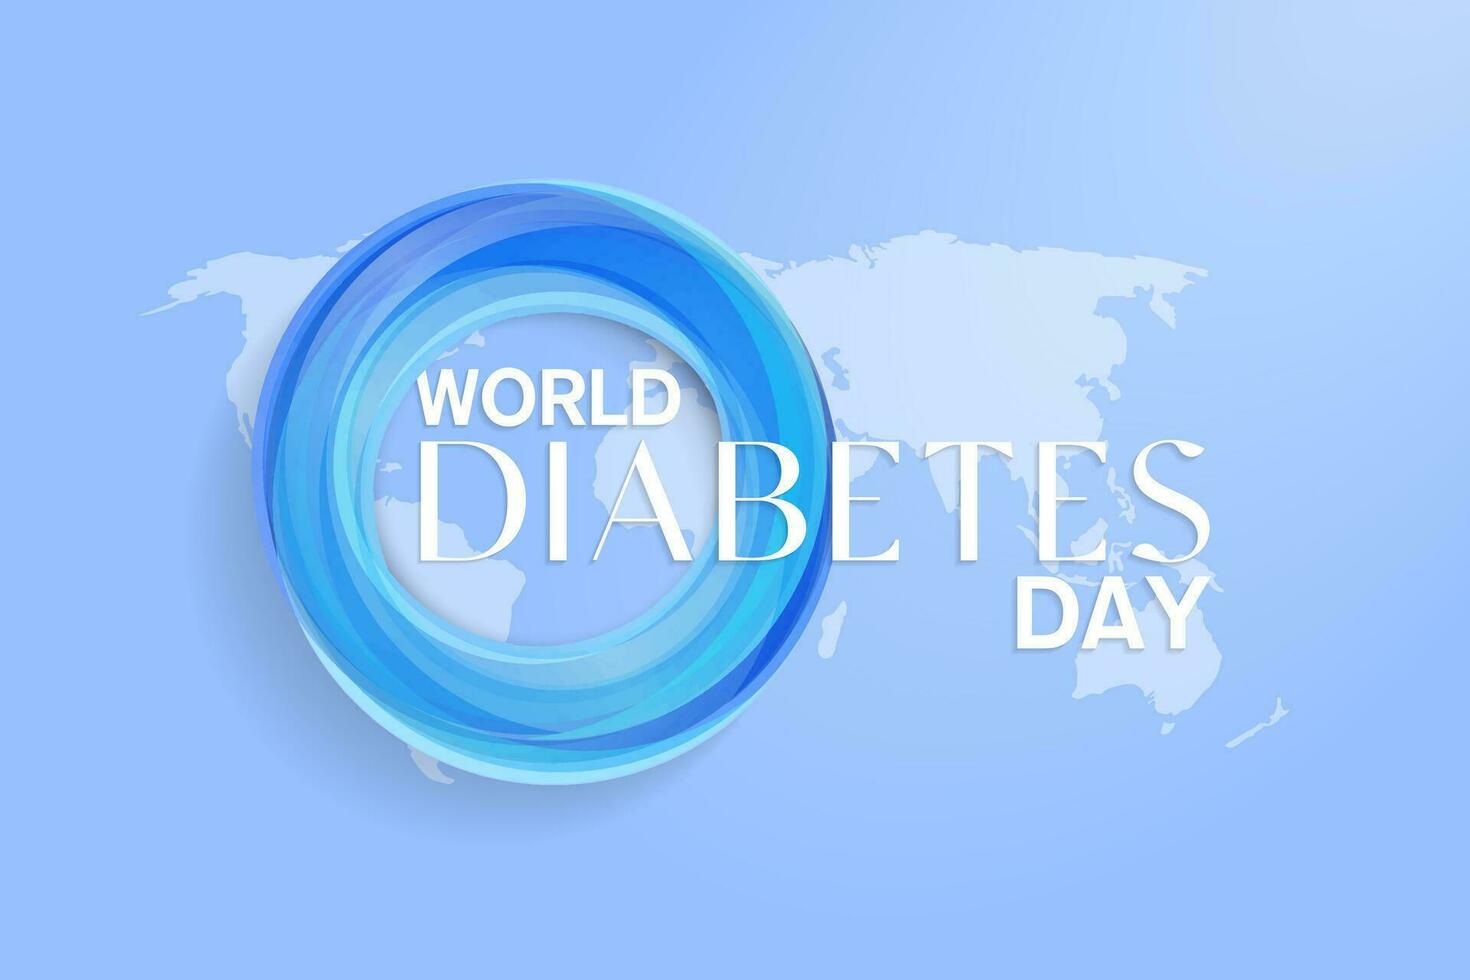 kreativ 3d värld diabetes dag baner på Karta av jorden, berömd på november 14. diabetes dag begrepp baner mall tapet. vektor illustration. eps 10.